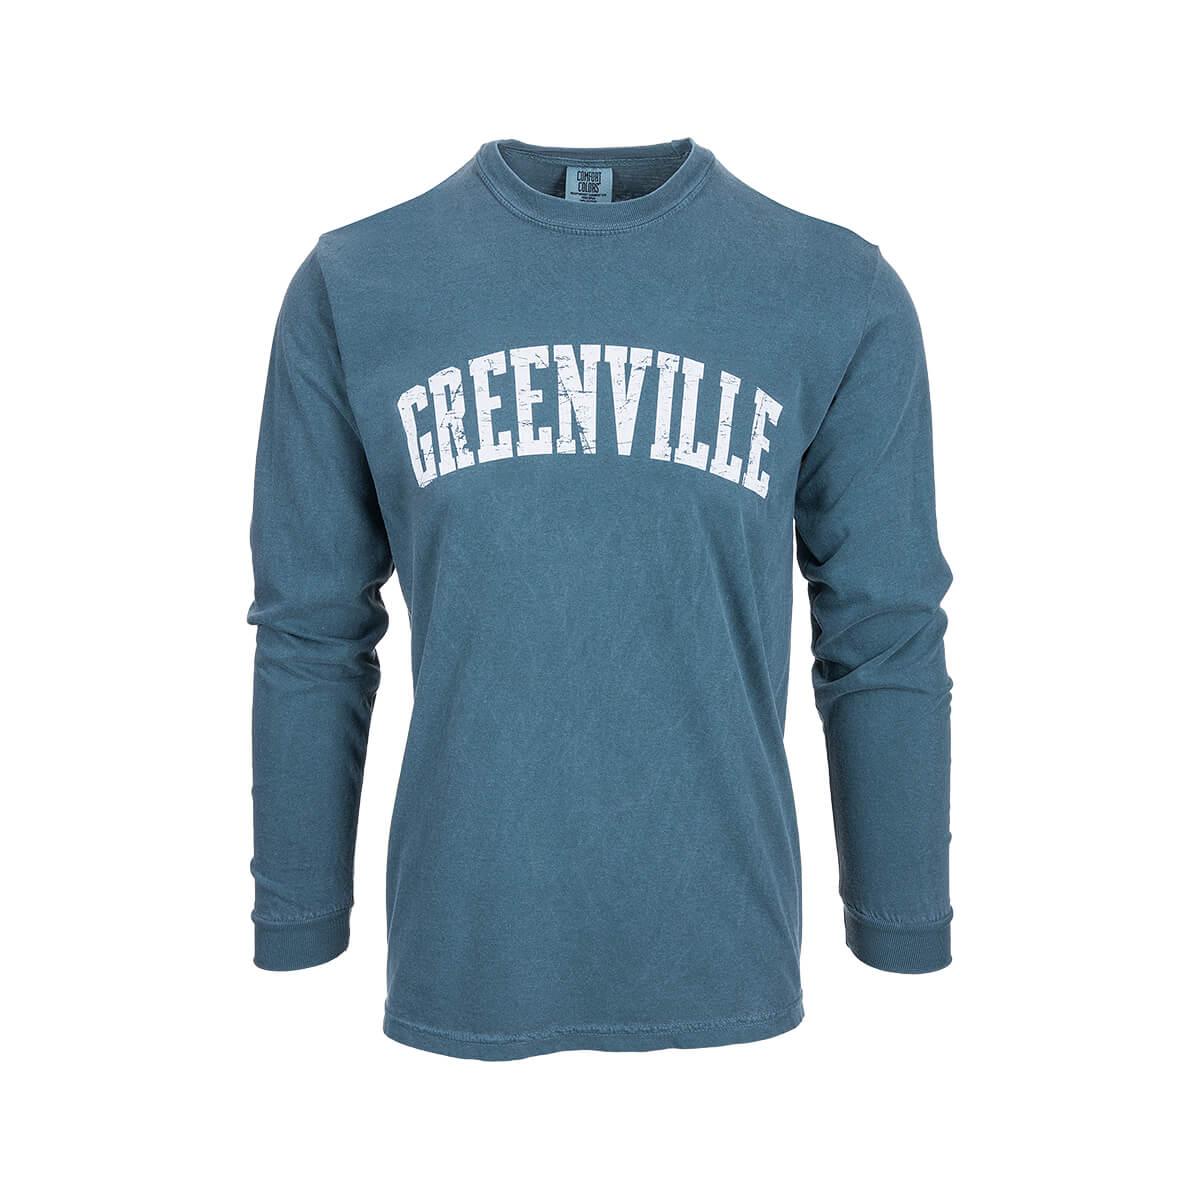  Mast General Store Greenville Long Sleeve T- Shirt